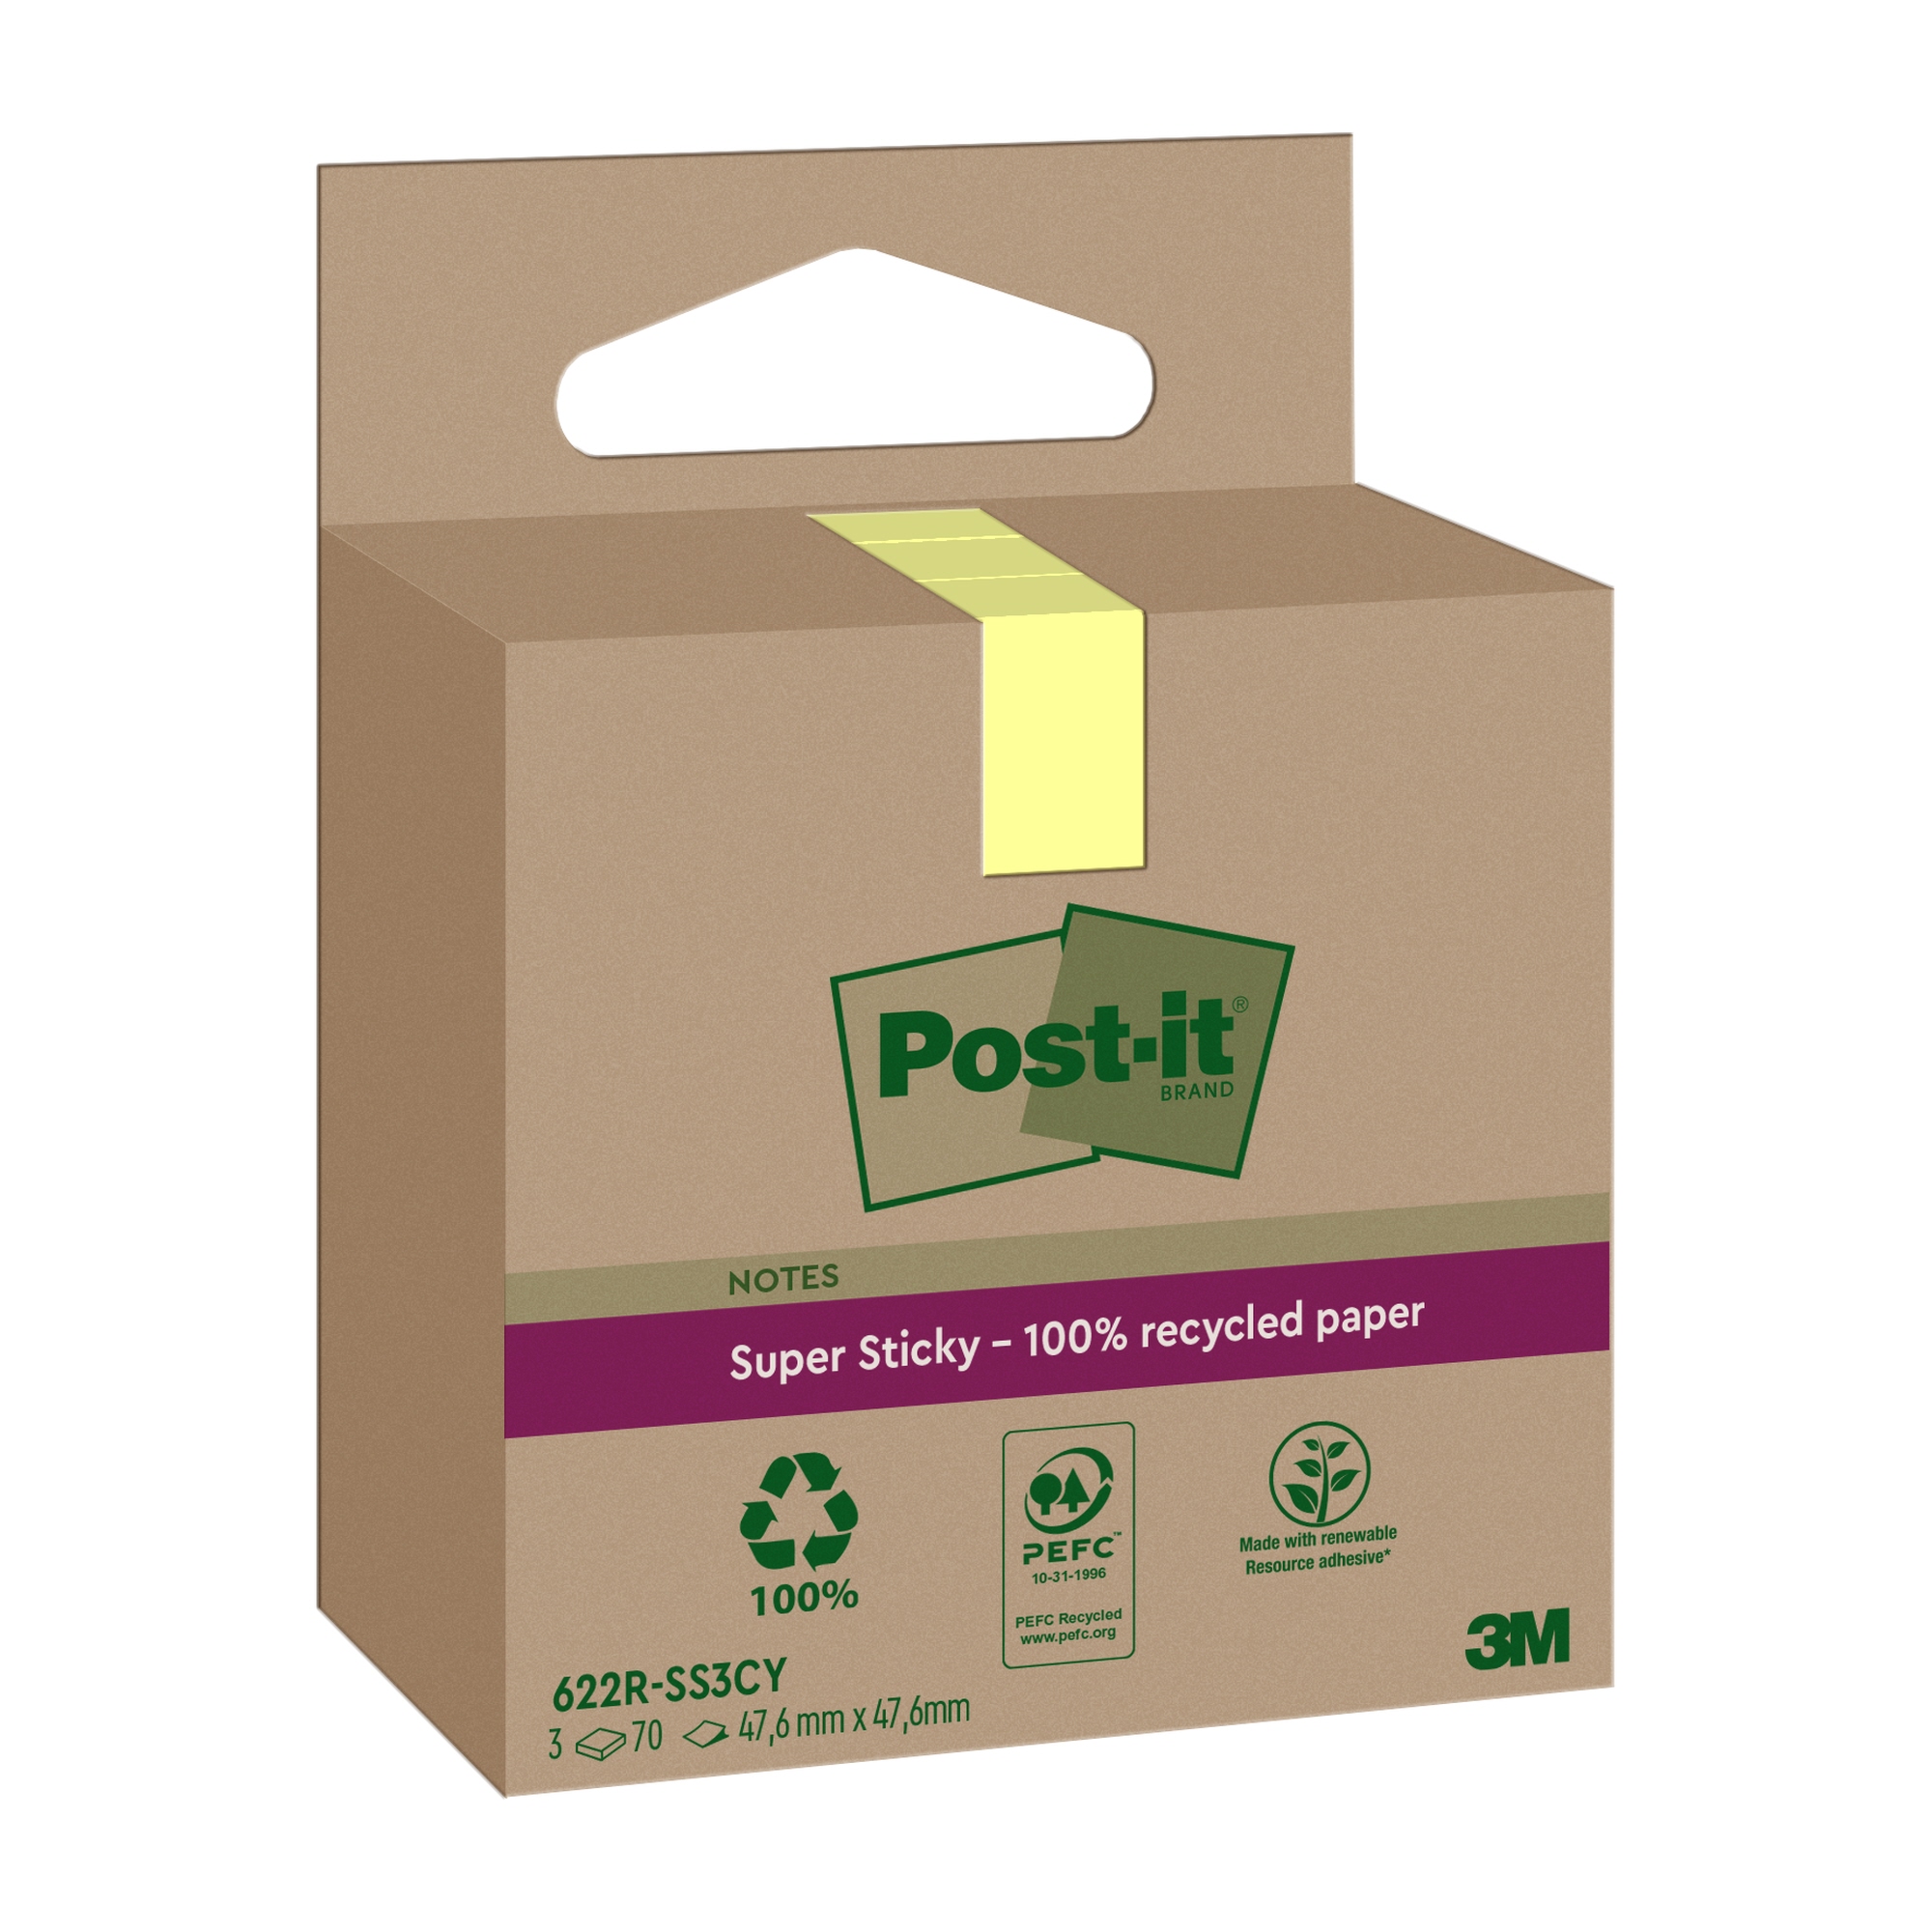 Post-it® Haftnotiz Super Sticky Recycling Notes 47,6 mm 3 Block/Pack.